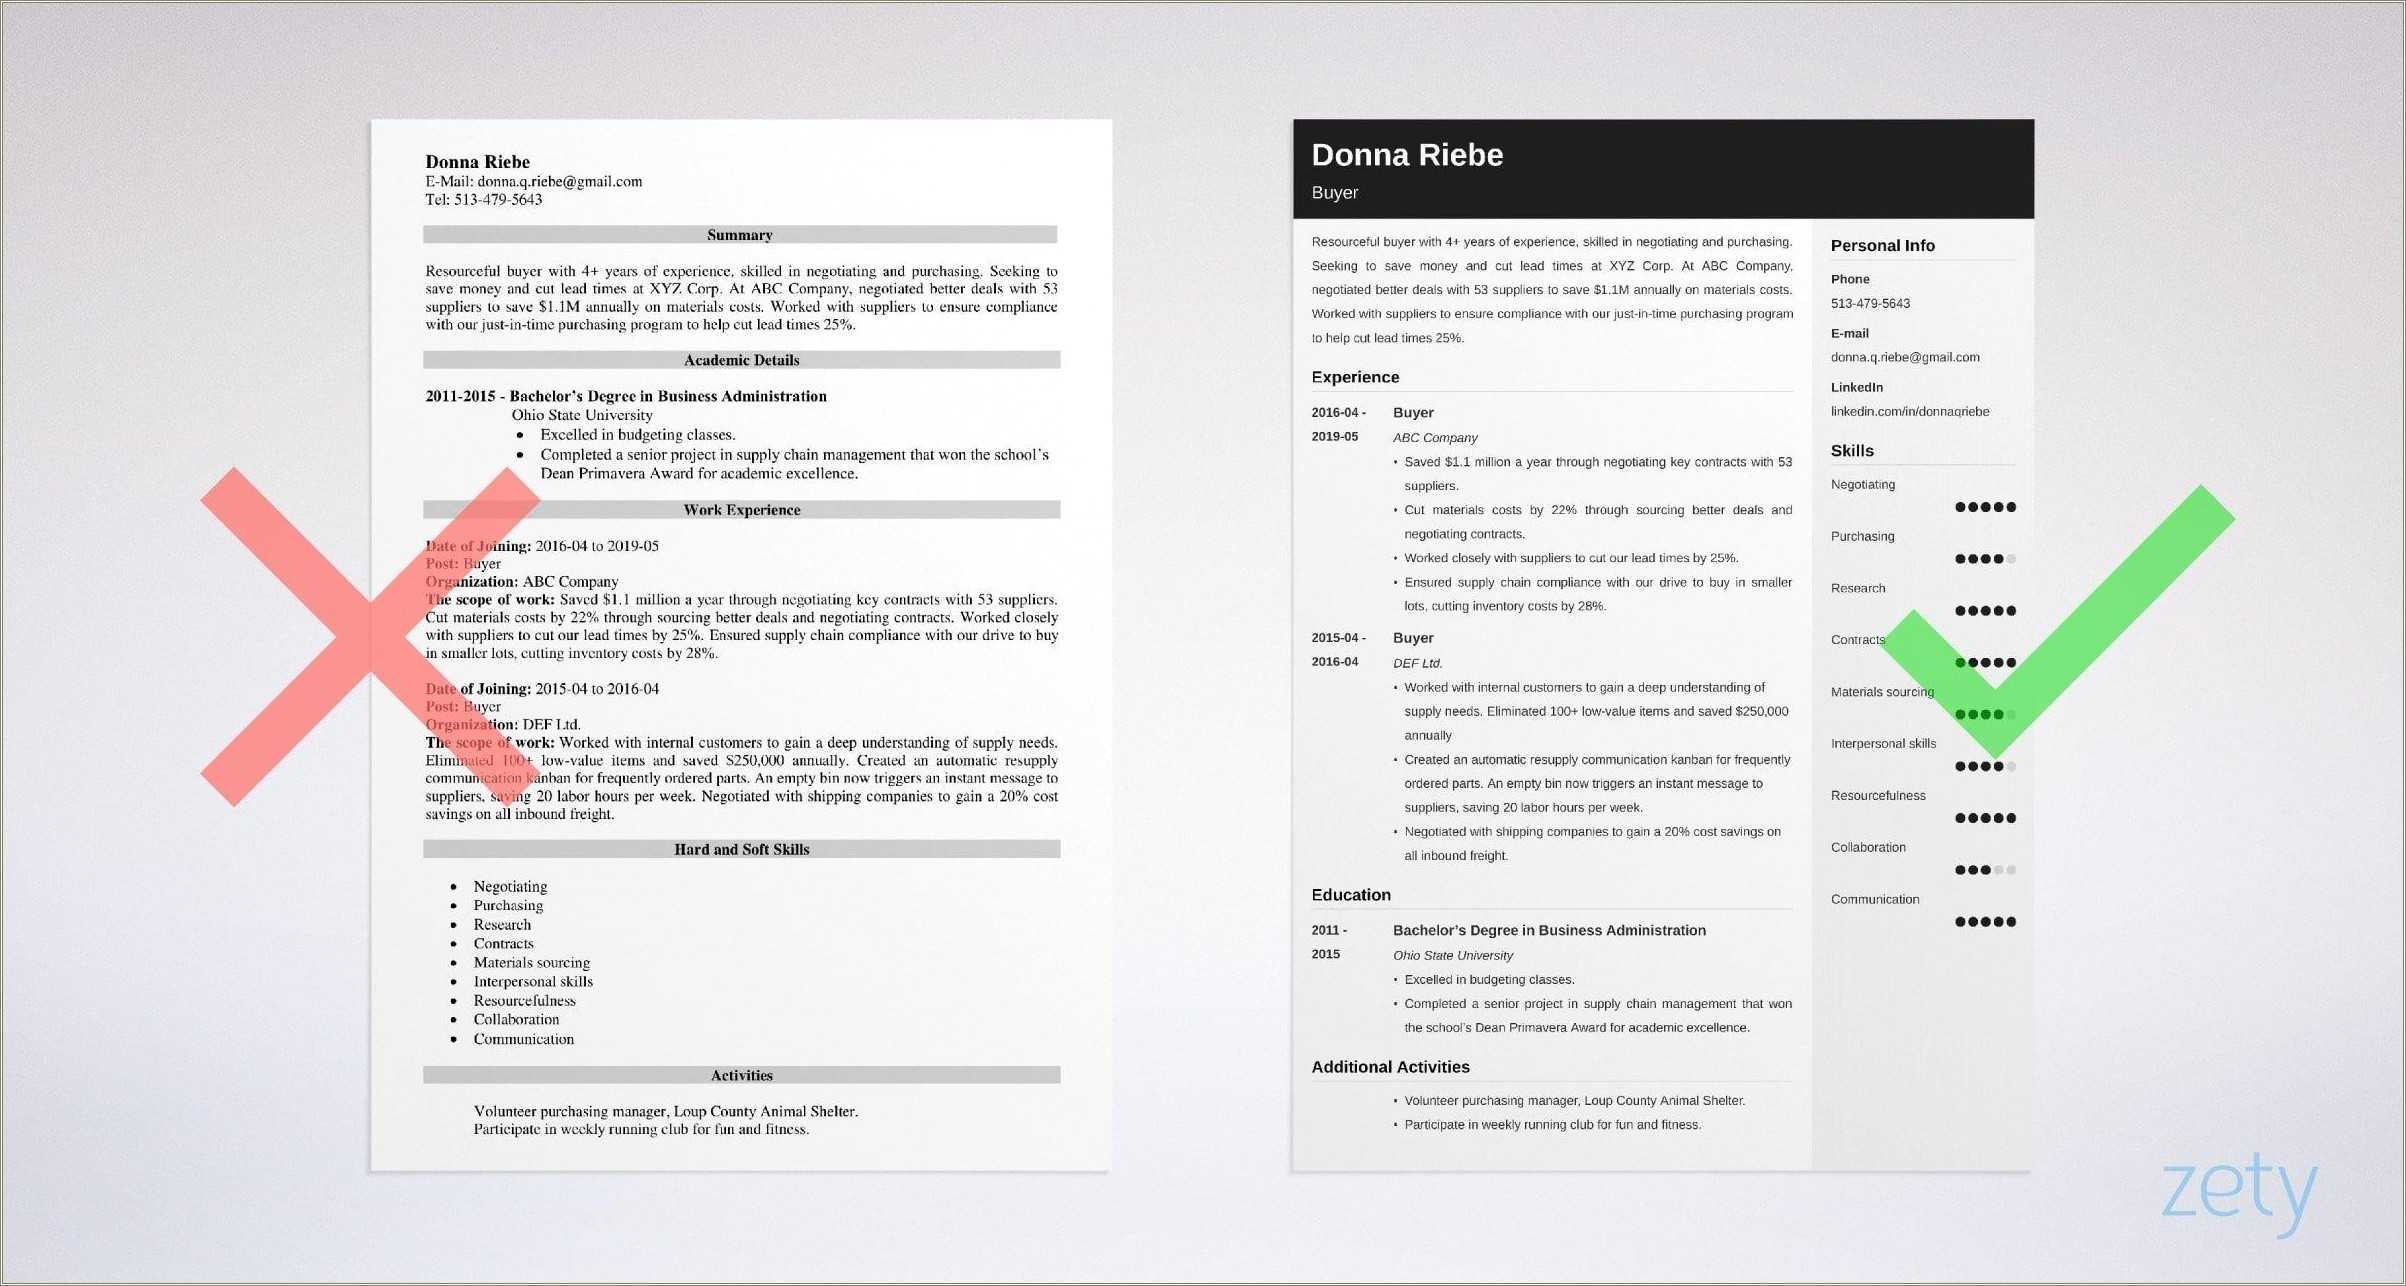 Resume Examples The Ohio State University Resume Example Gallery